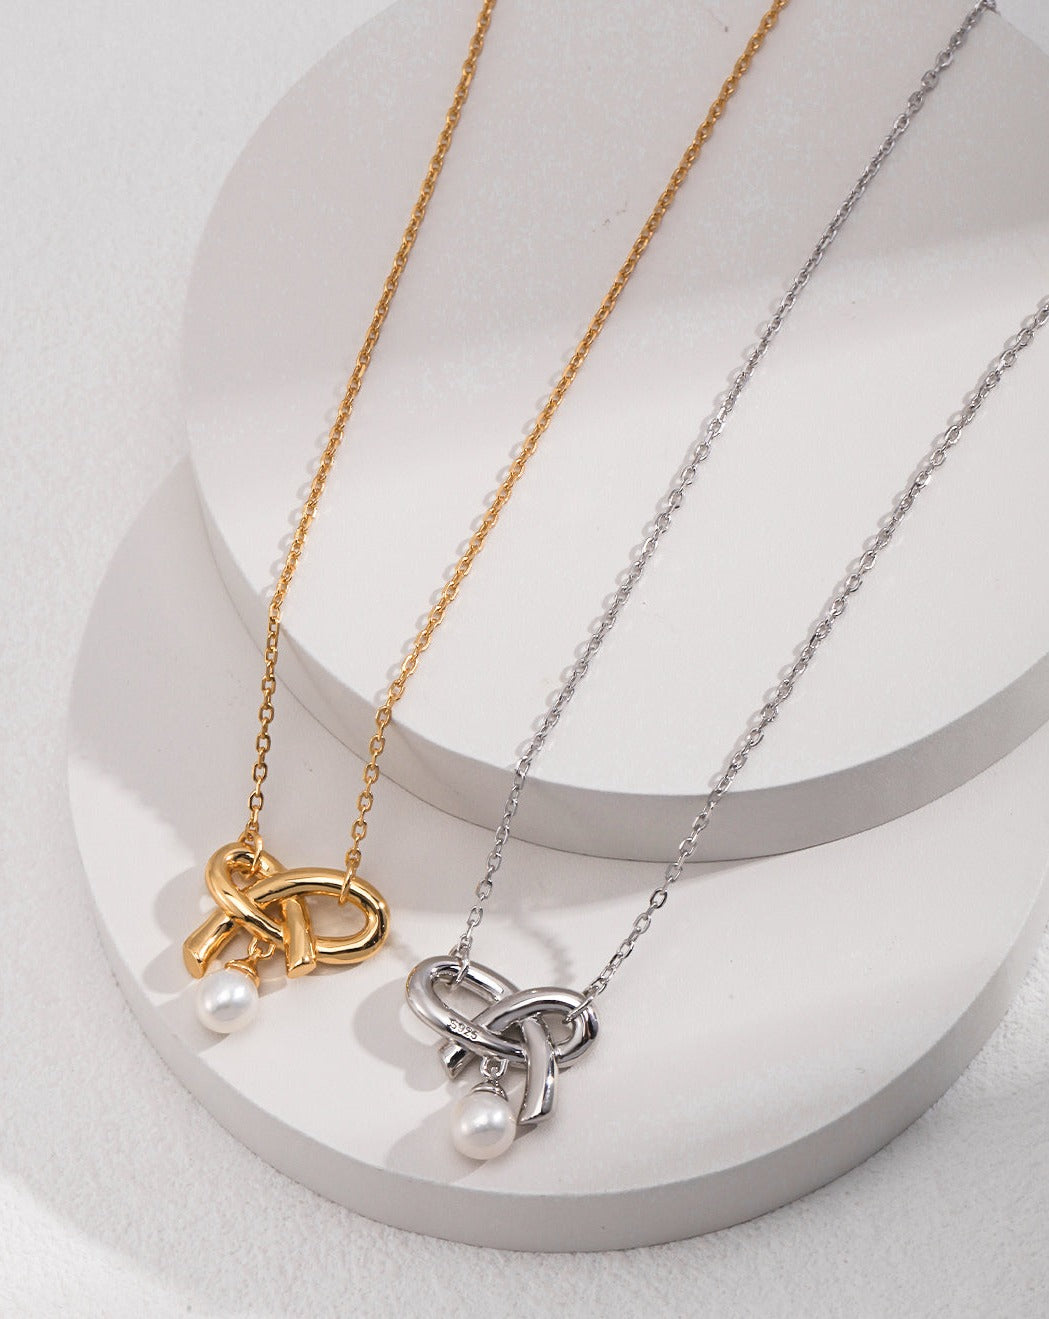 fashion-jewelry-minimalist-jewelry-design-jewelry-set-necklace-pearl-earring-gold-coated-silver-bijoux-minimalist-retro-gold-design-necklace-butterfly-heart-shape-pearl-necklace-earrings